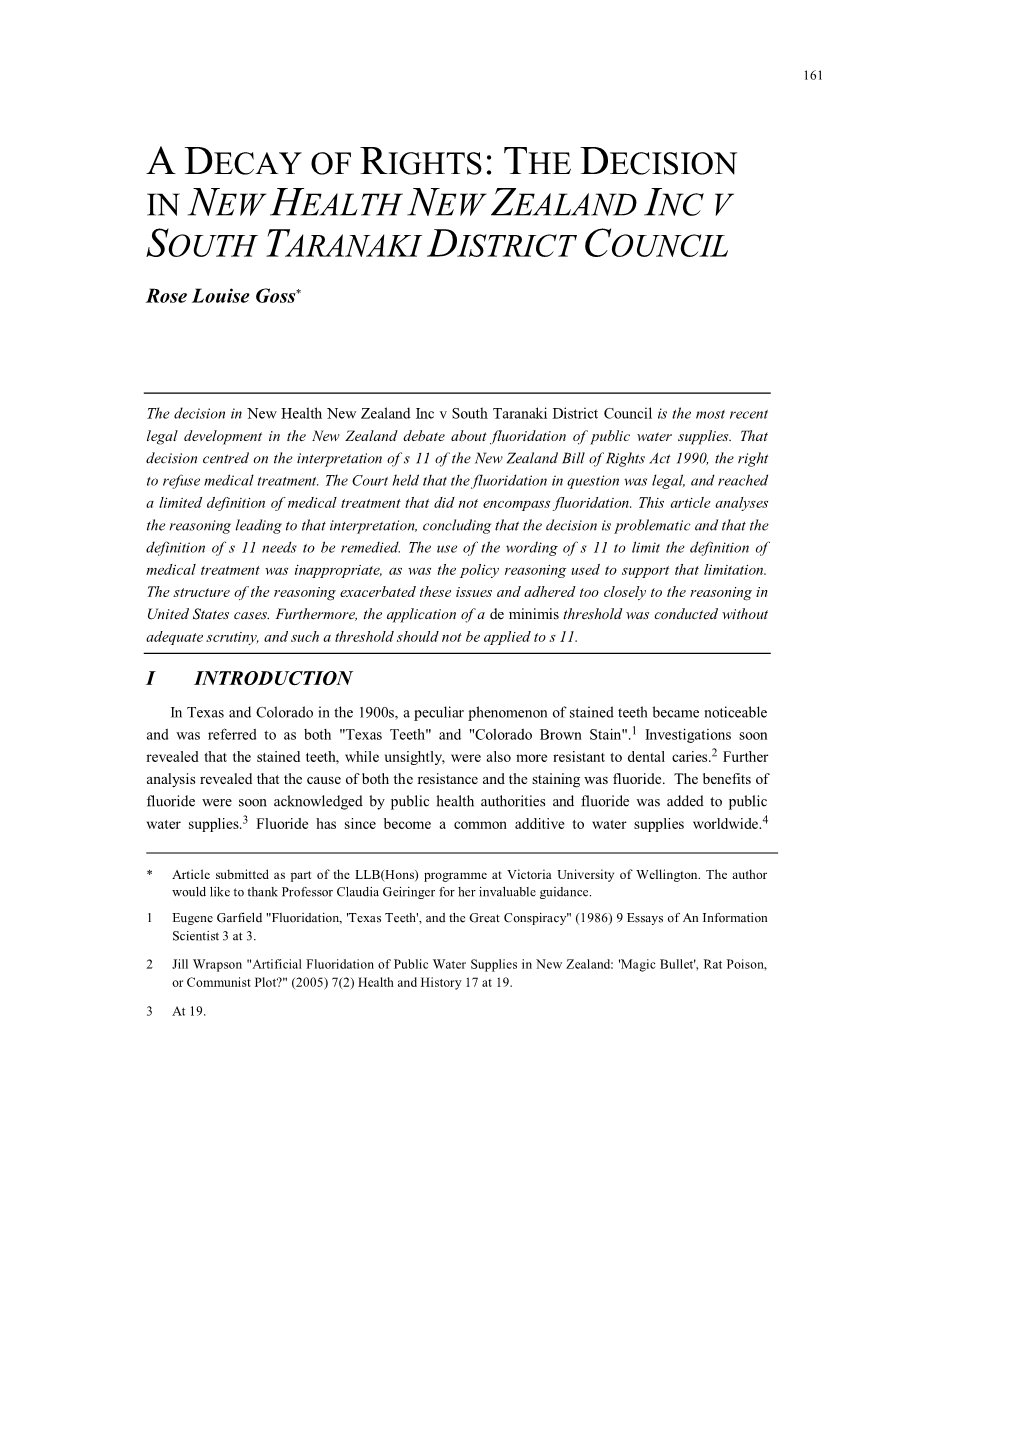 The Decision in New Health New Zealand Inc V South Taranaki District Council